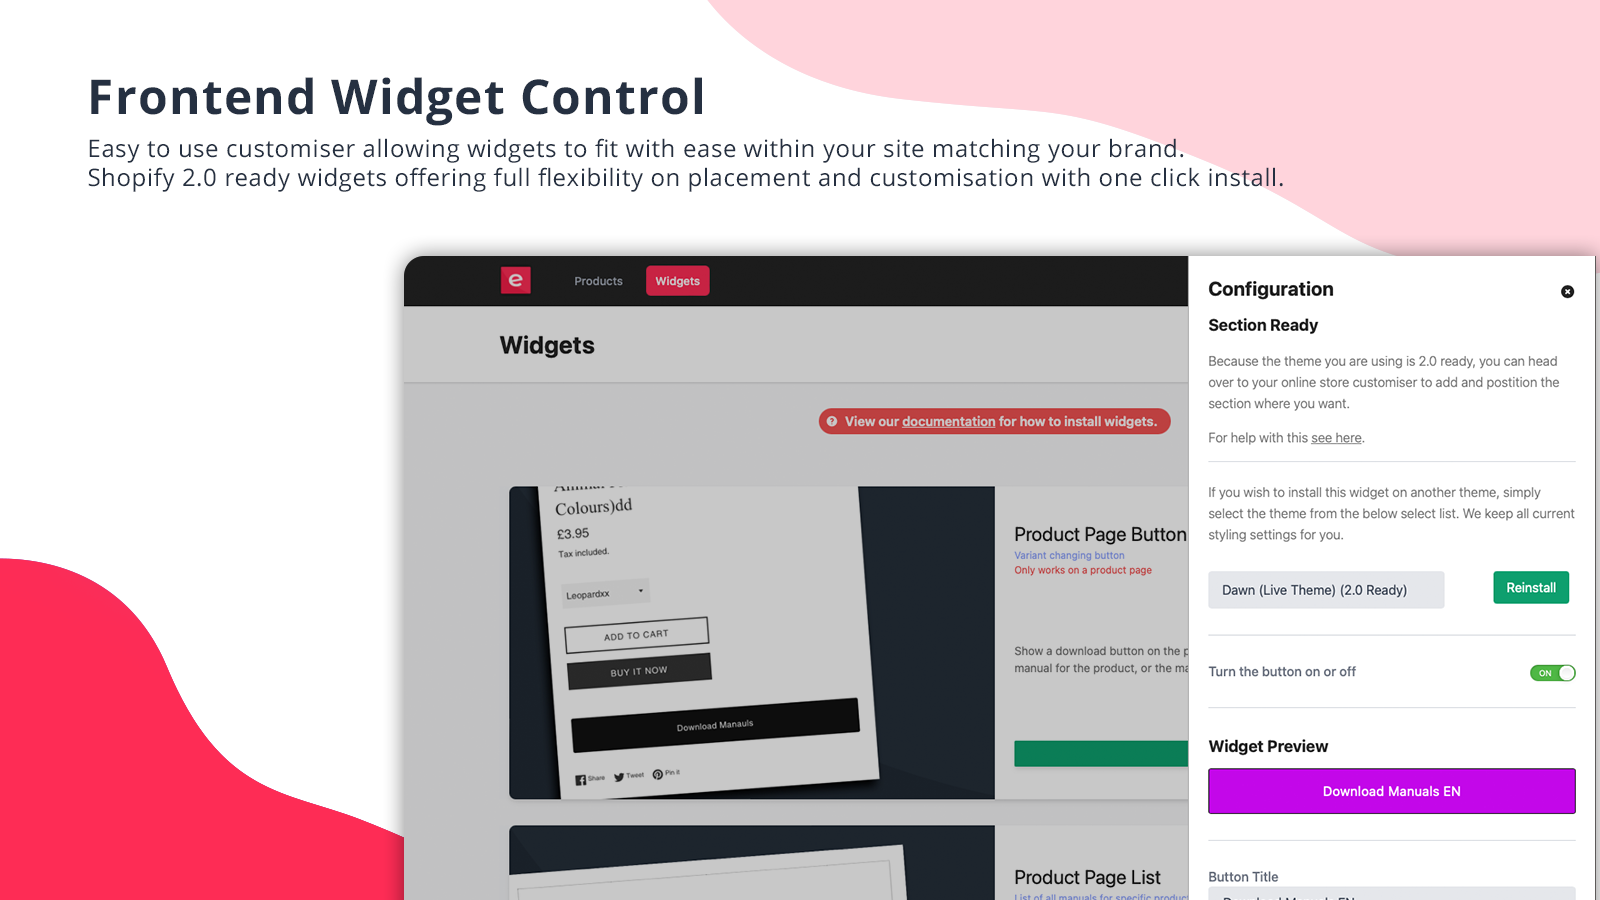 Widget Page & Widget Configurator Sidebar